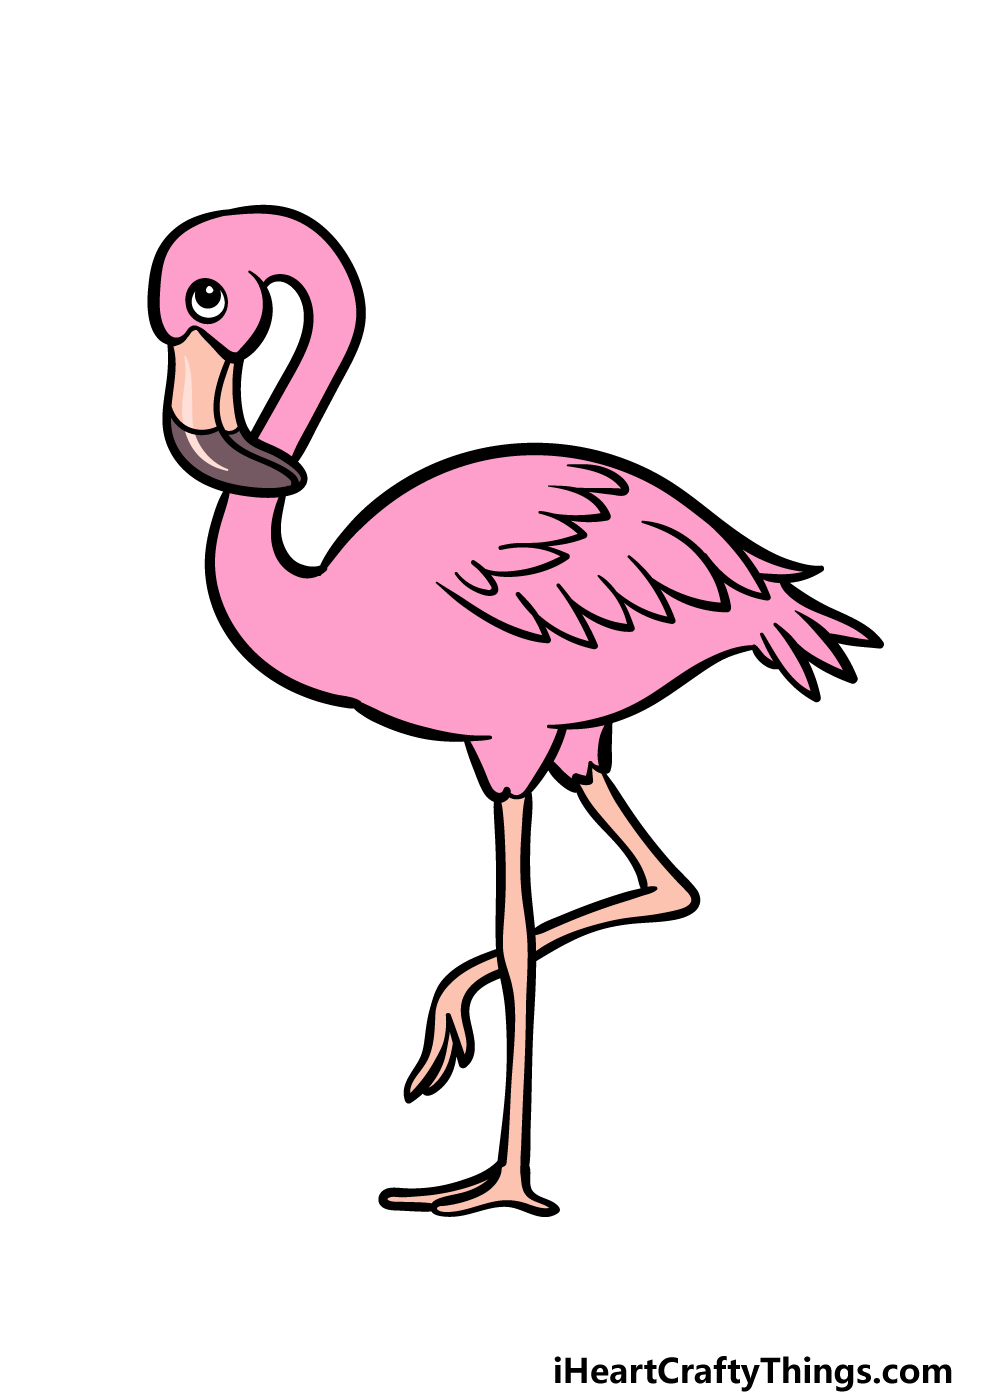 Pink Flamingo Yoga Pose Poster With 25 Asanas 18 X 24 Poster - Etsy